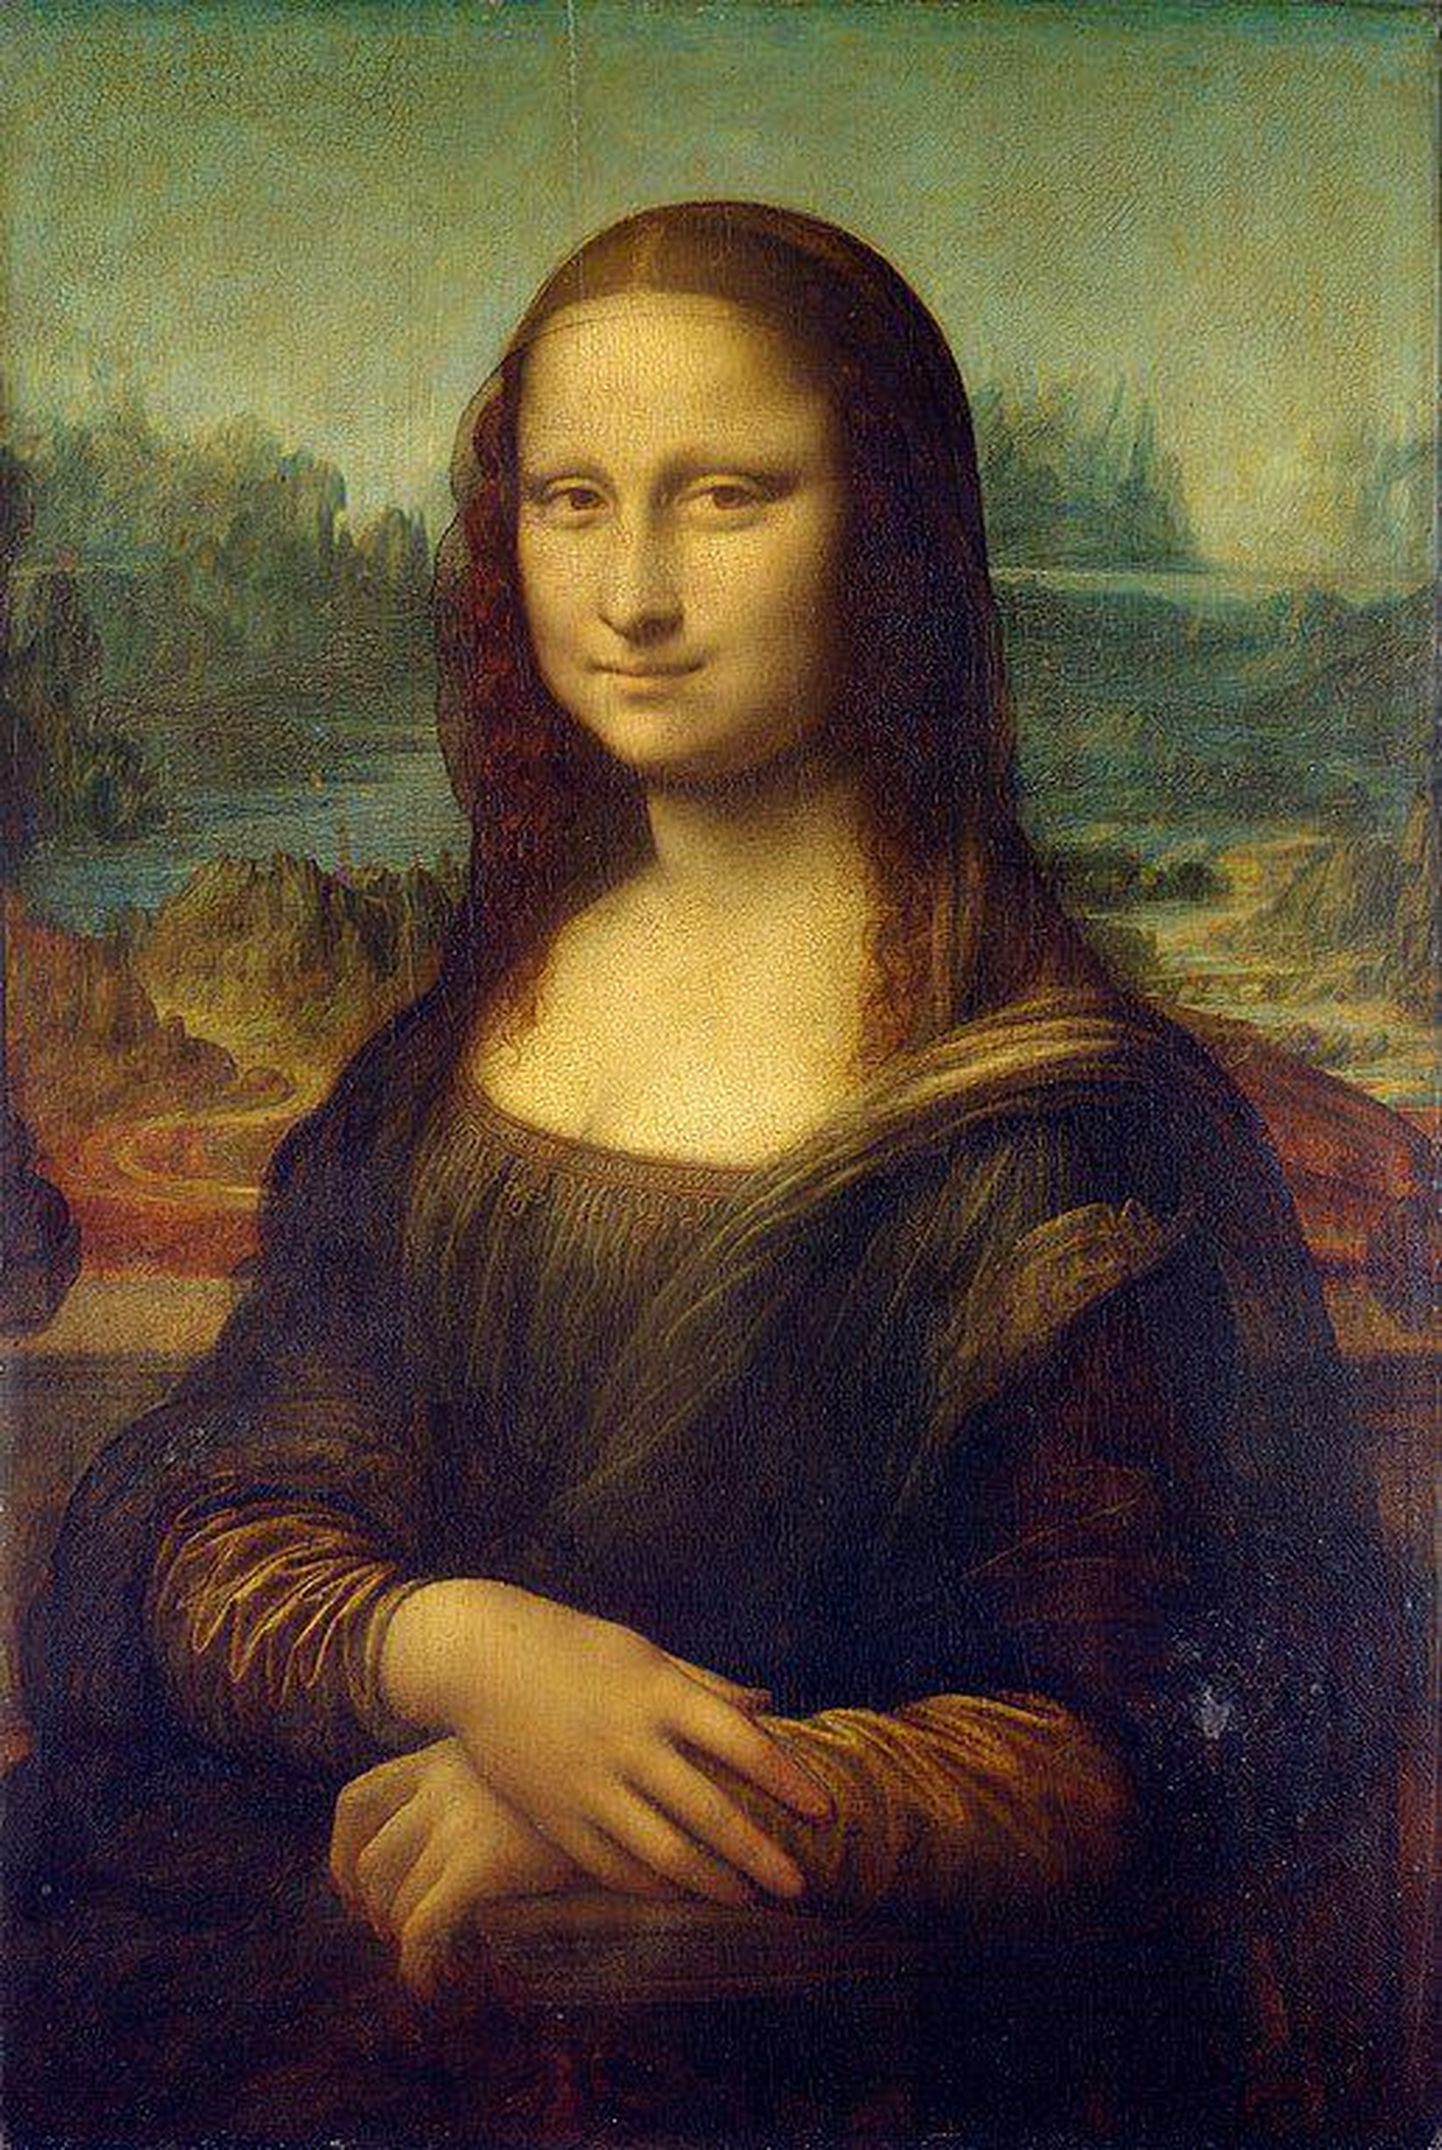 Картина Леонардо да Винчи "Мона Лиза".